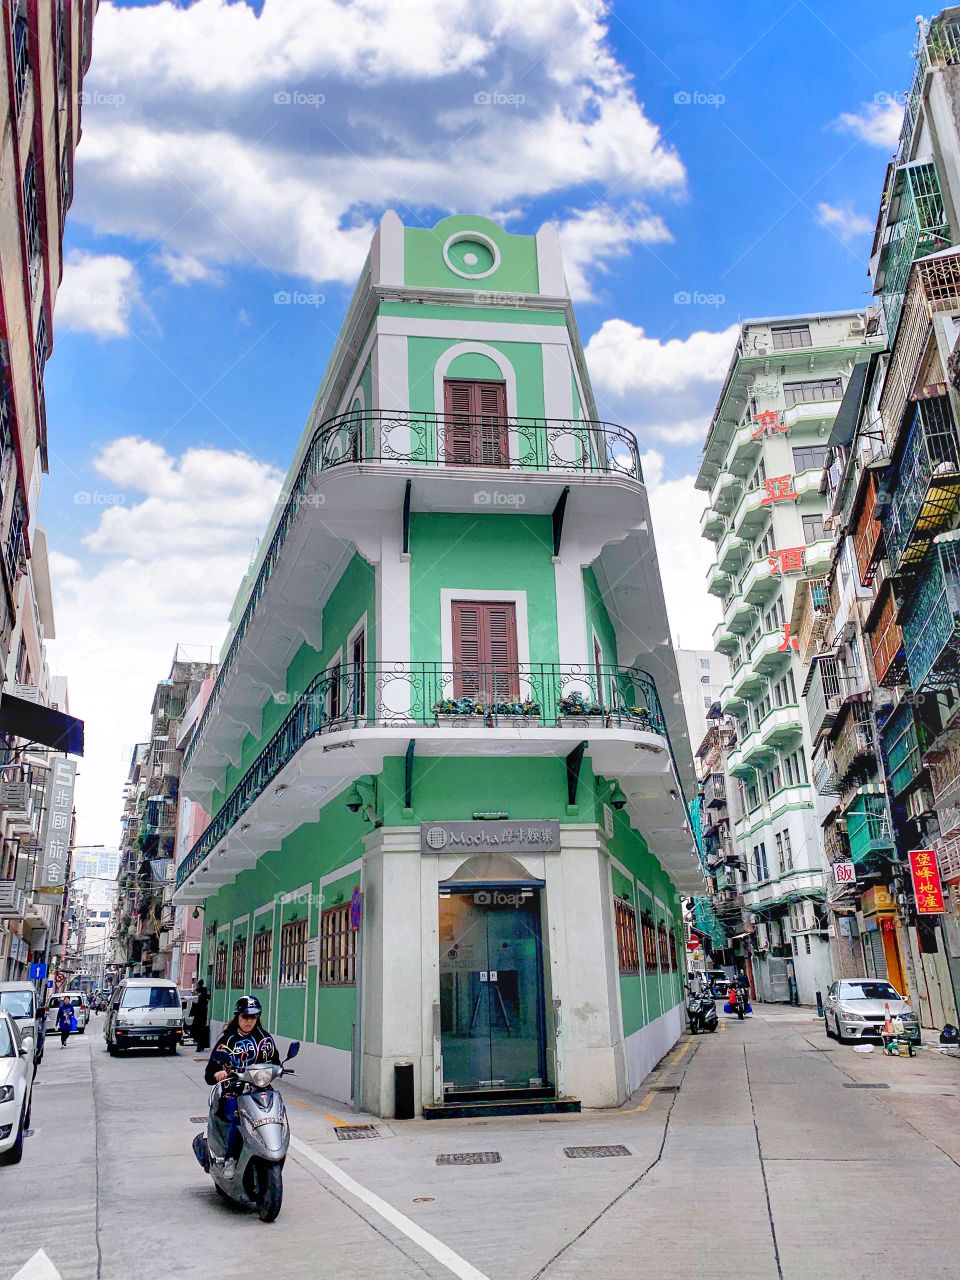 Macau street view 